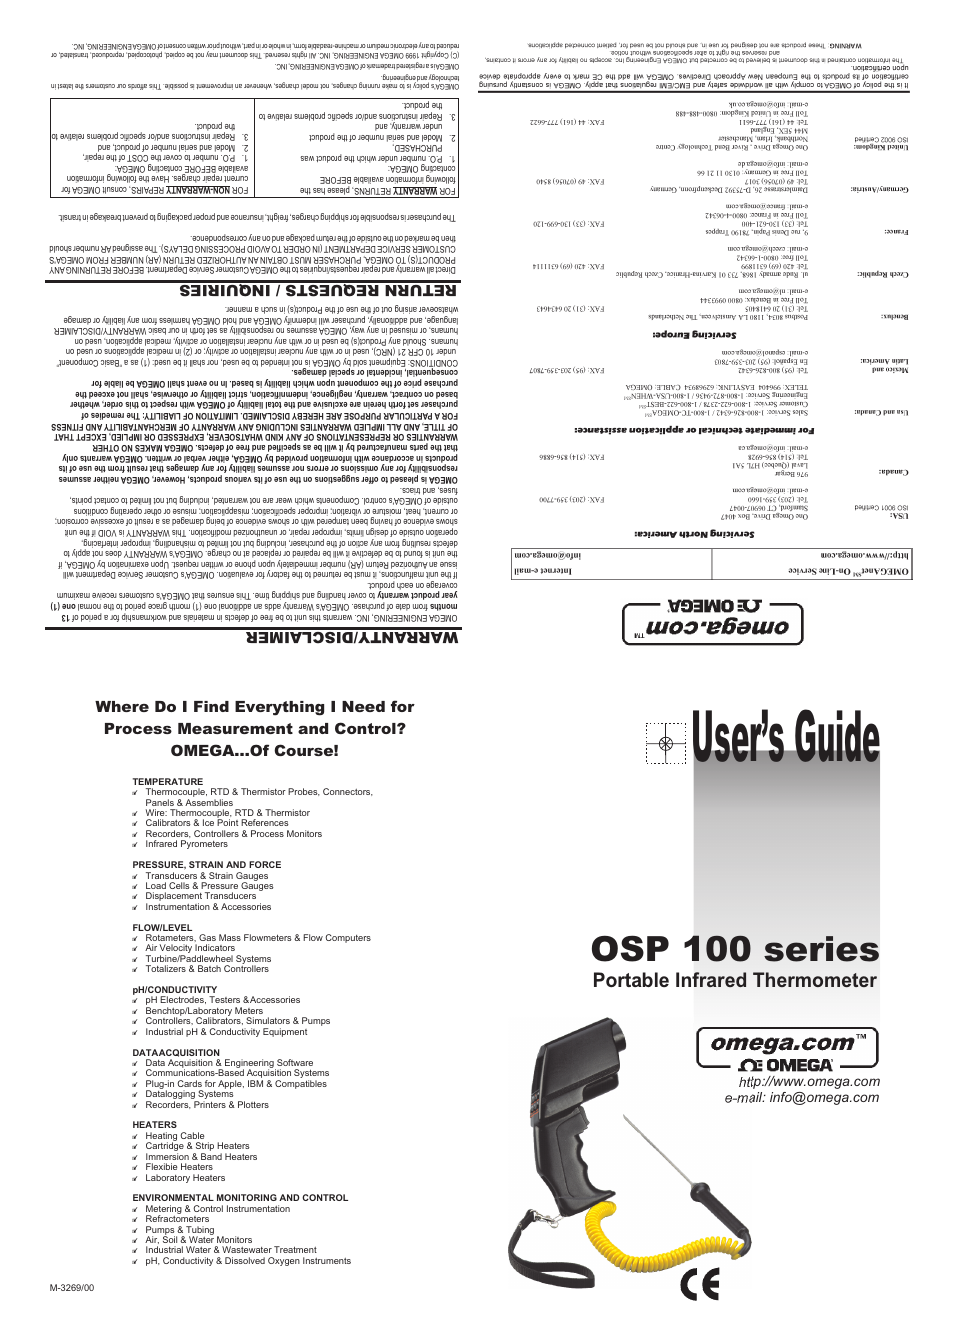 OSP100 Series